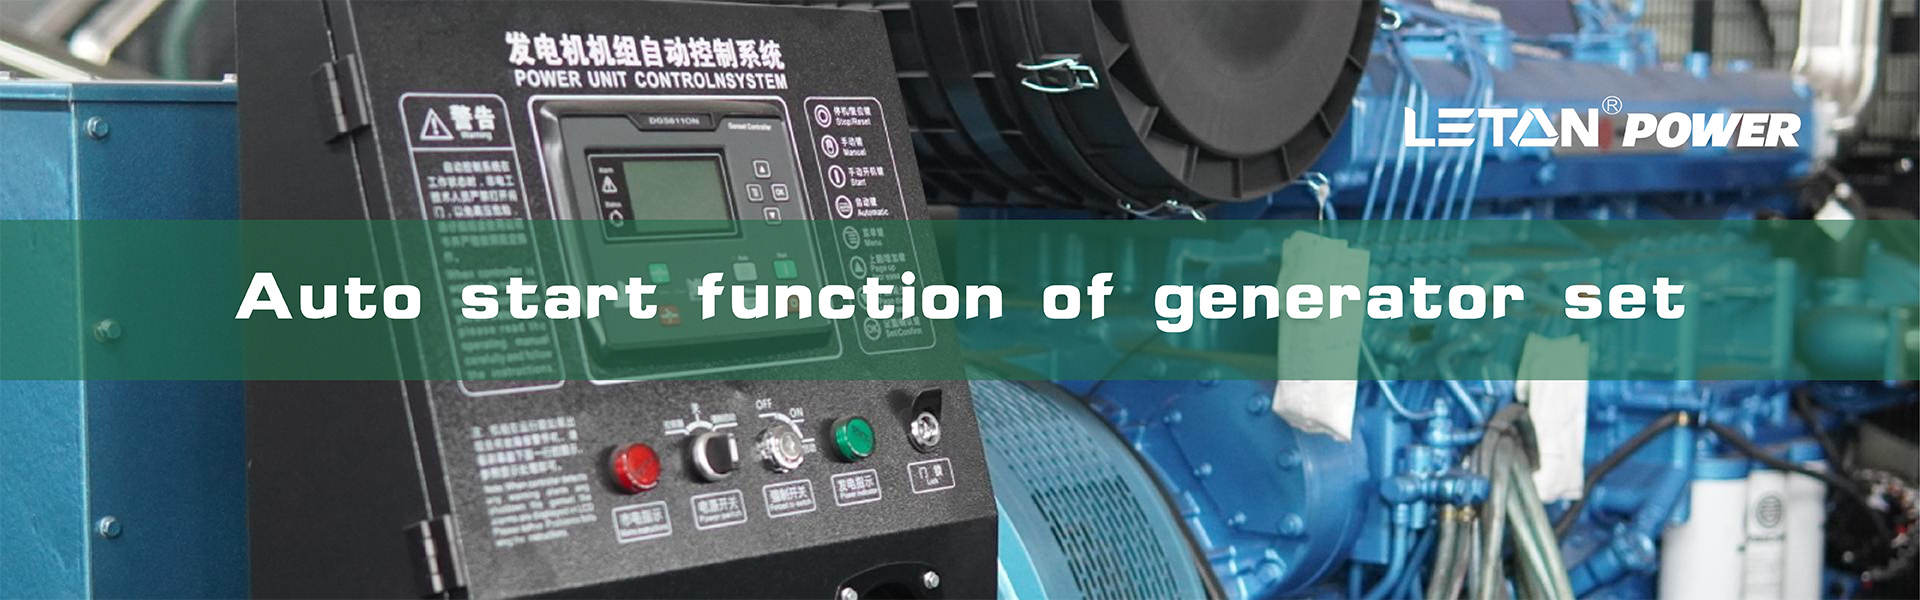 Auto start function of generator set